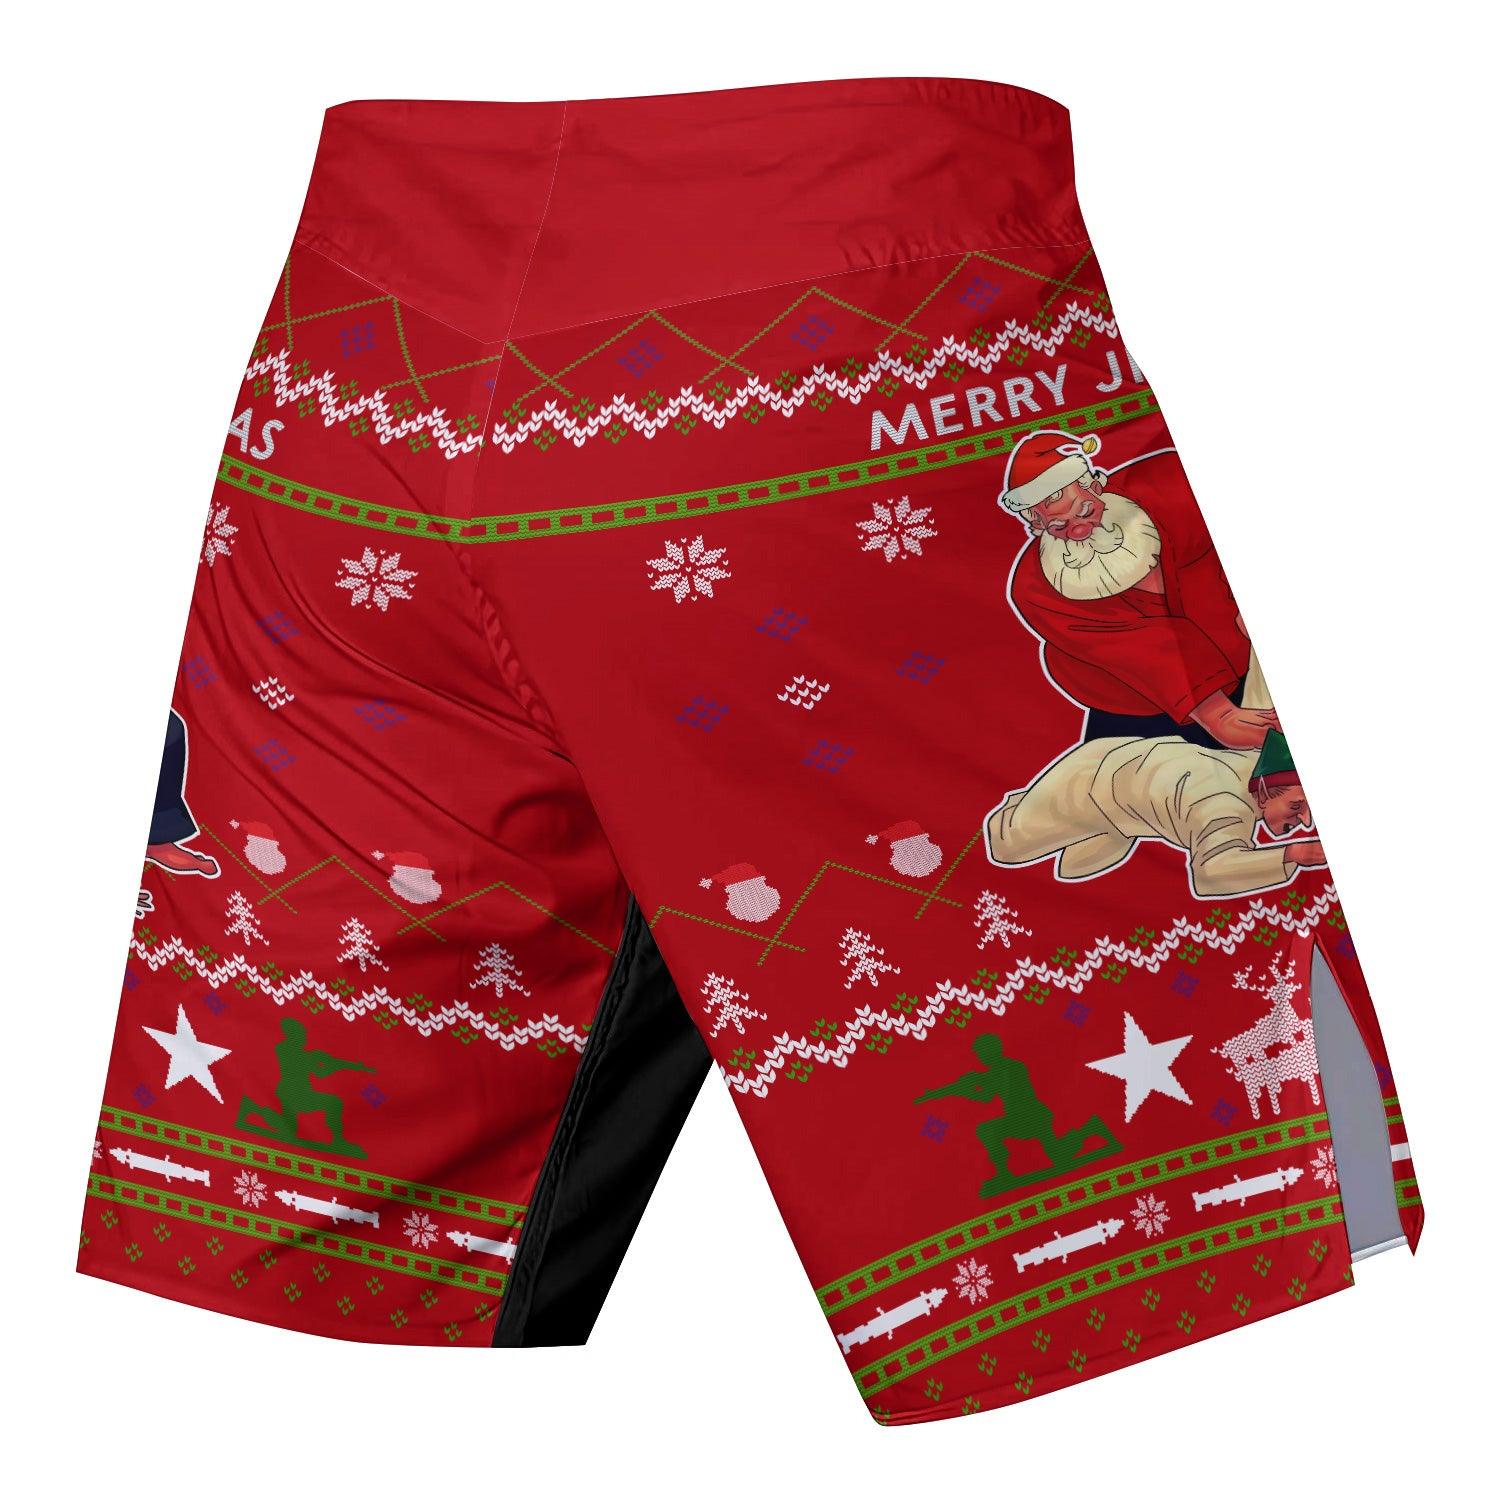 Santa Merry Jitsmas Fight Shorts